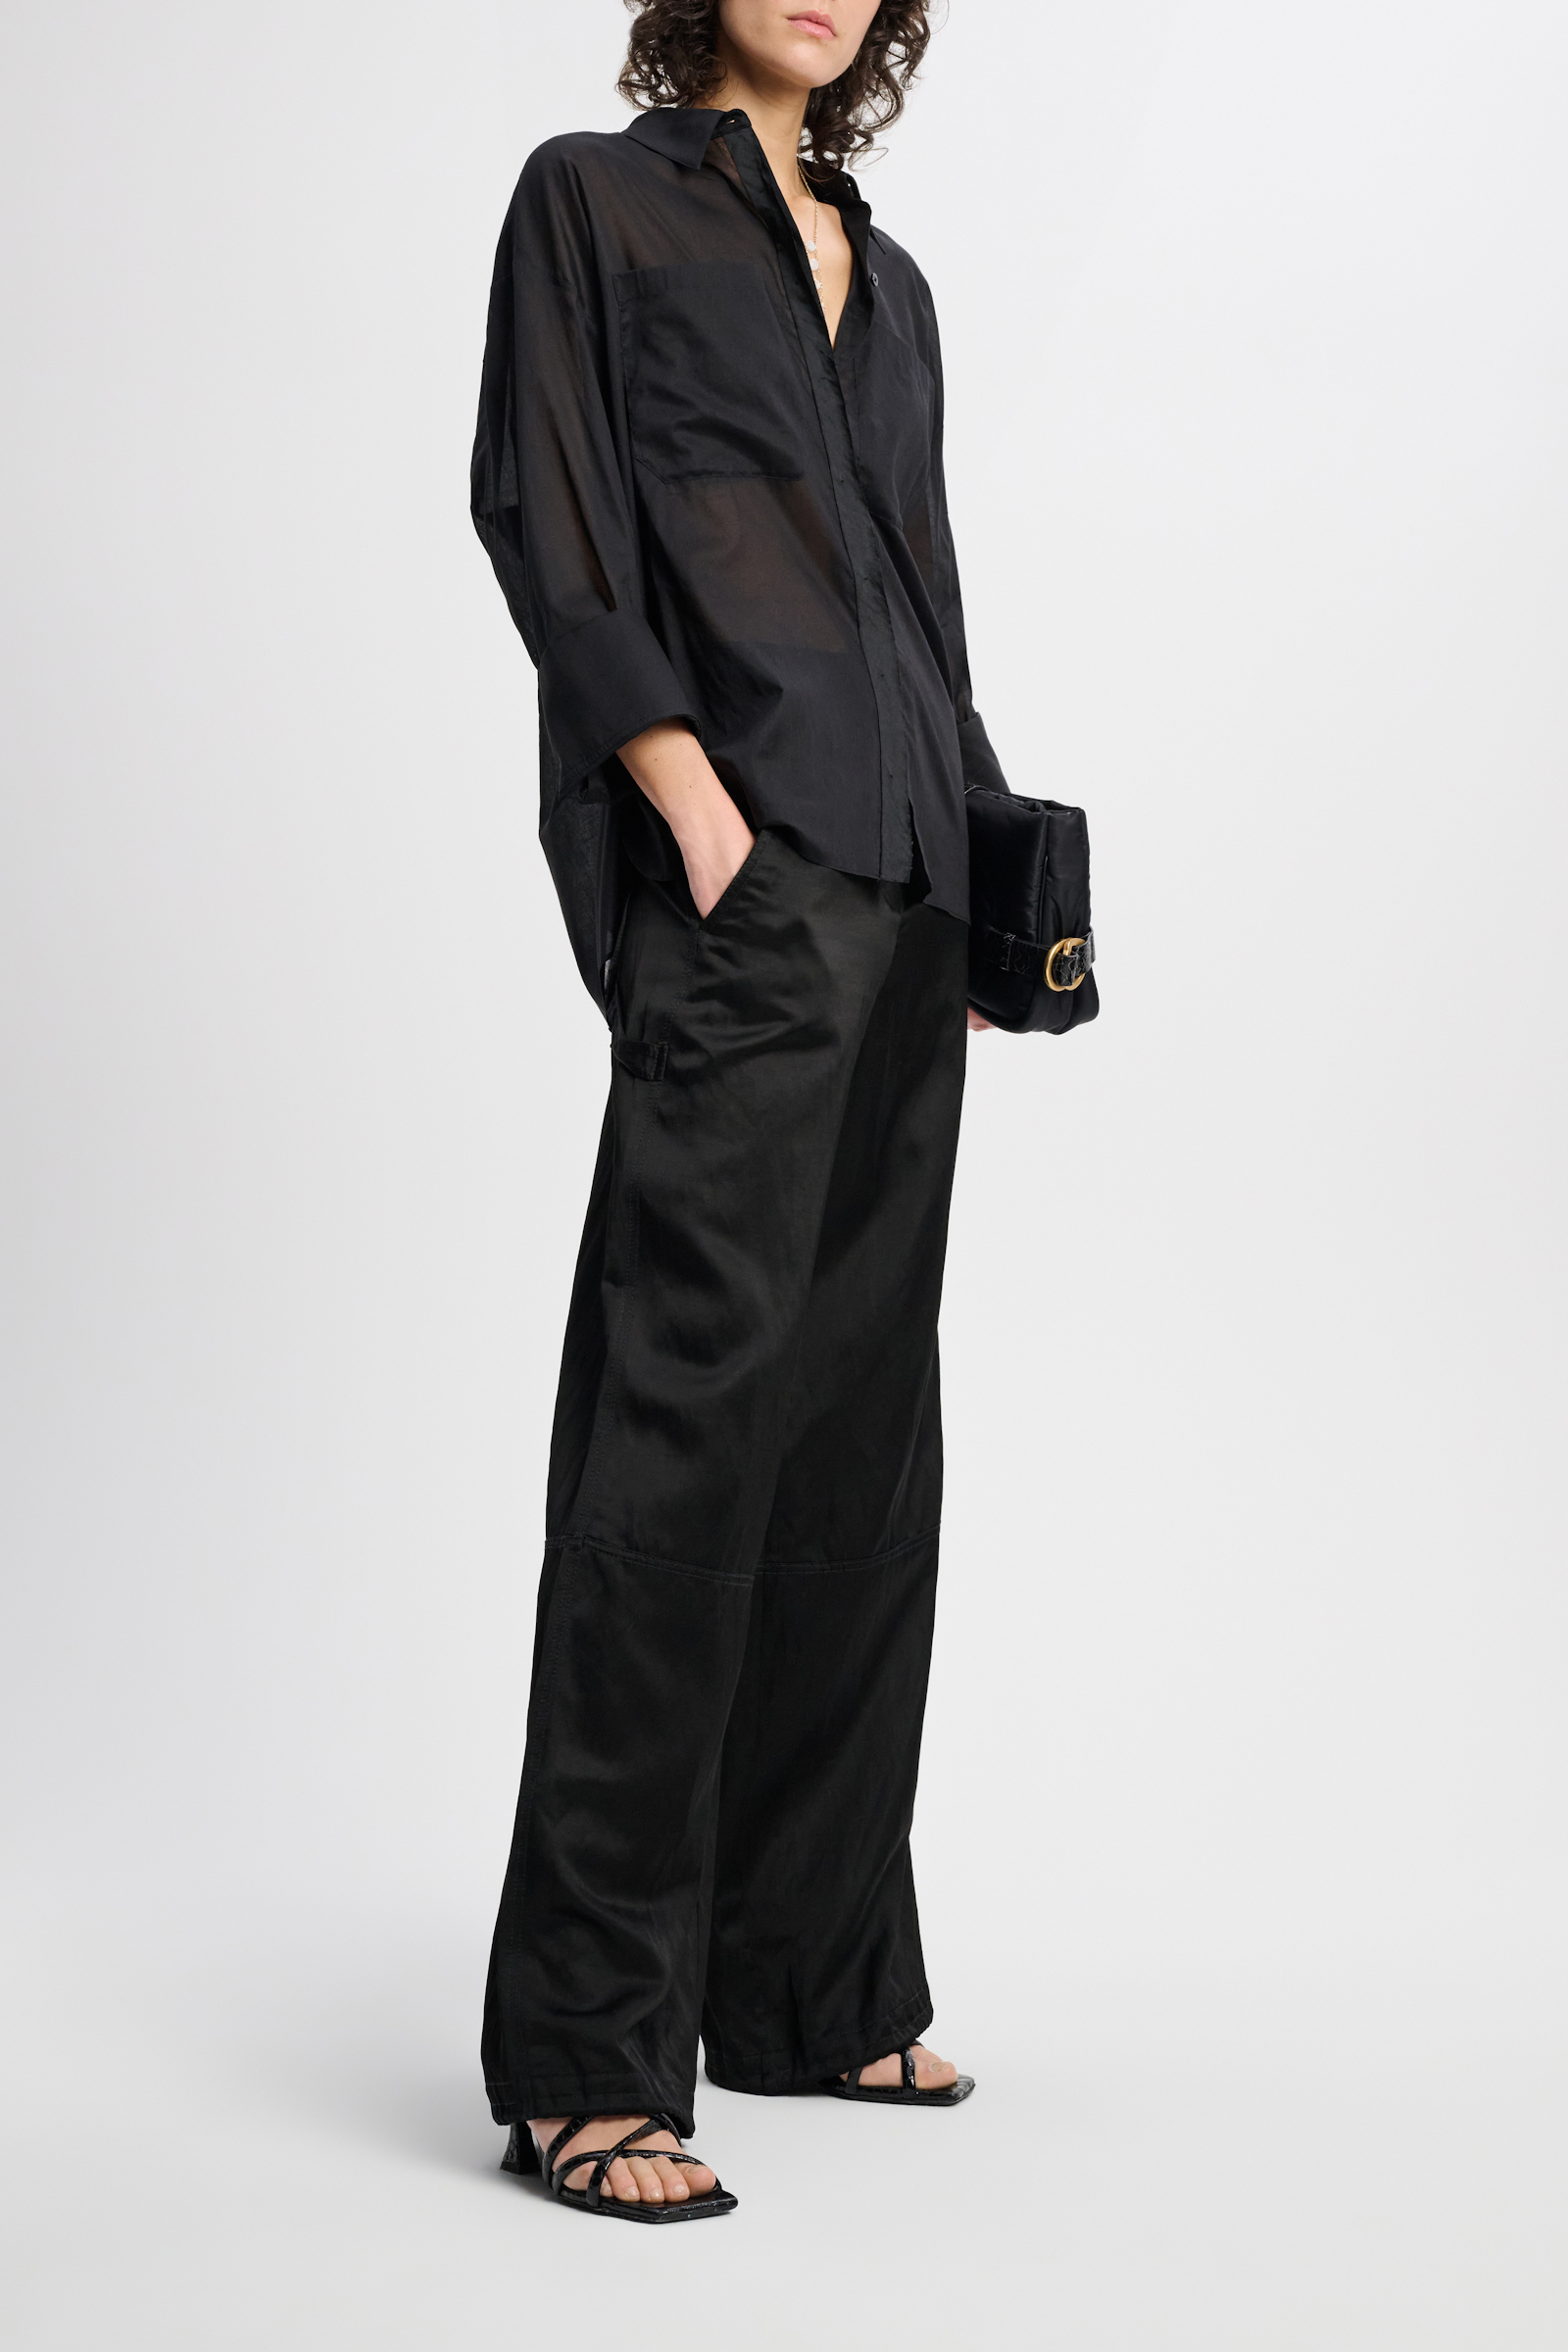 Dorothee Schumacher Oversized Bluse aus Cotton Voile pure black